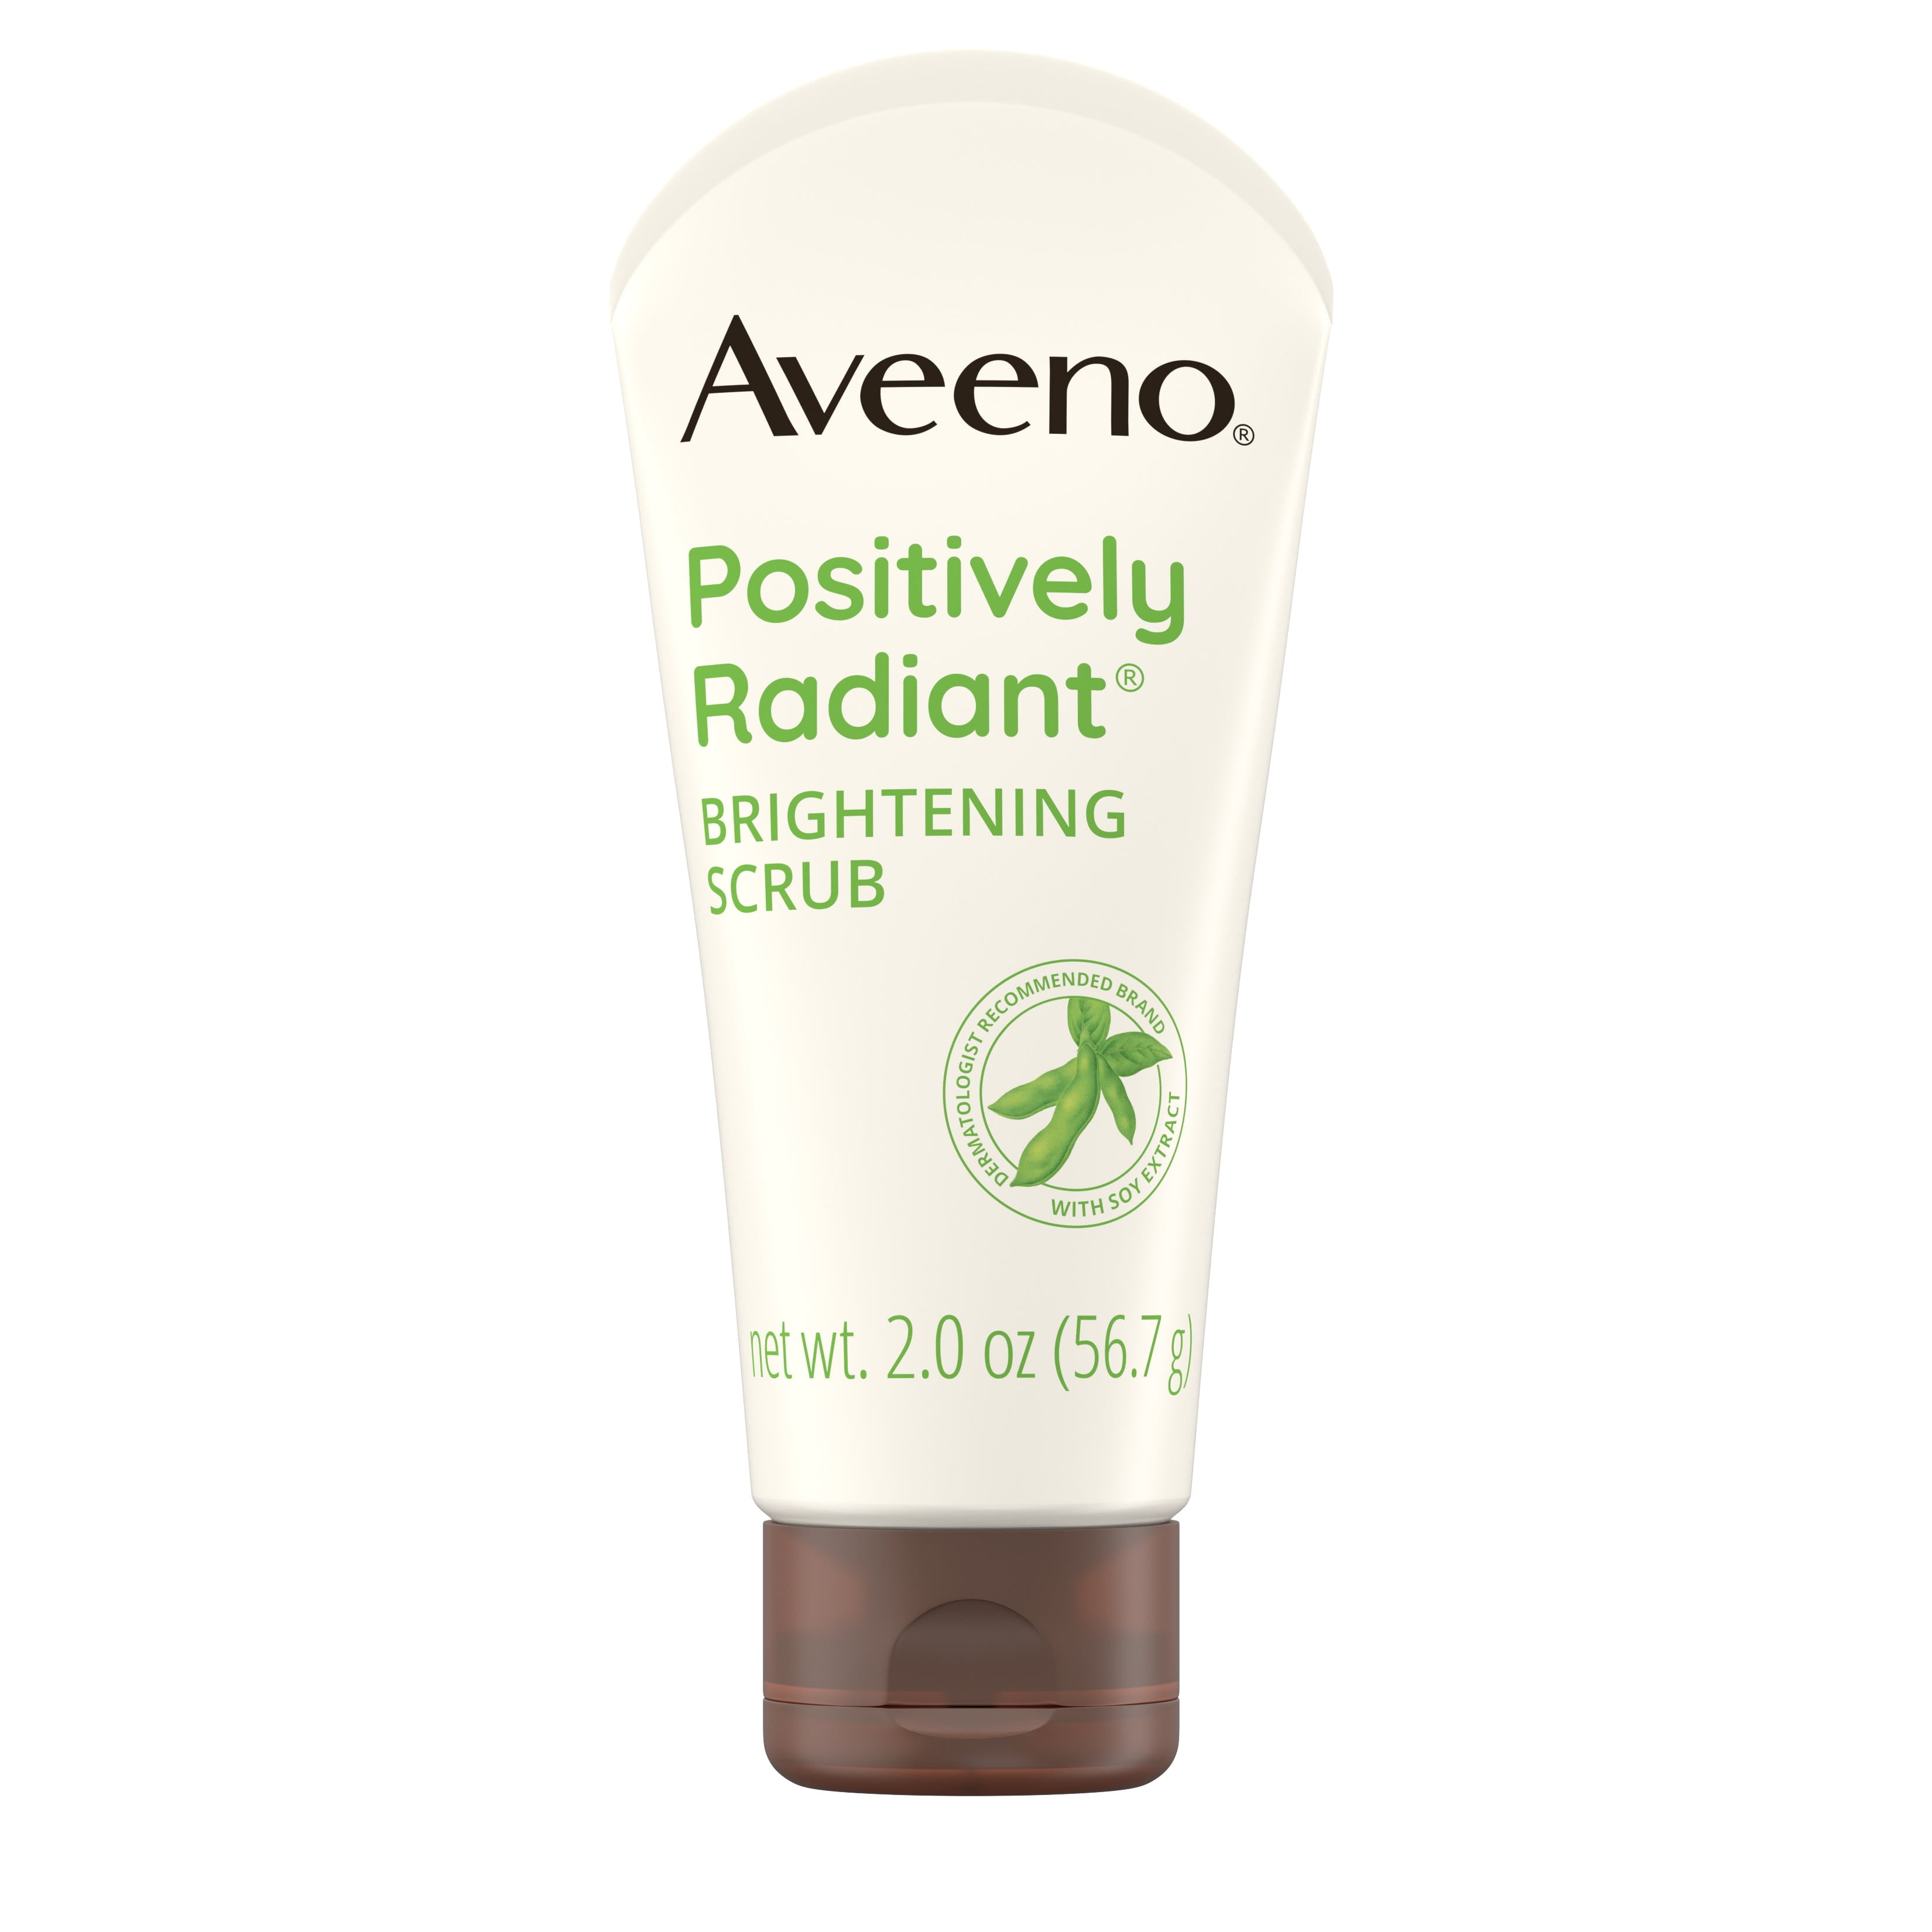 Aveeno Positively Radiant Brightening & Exfoliating Face Scrub, 2 oz